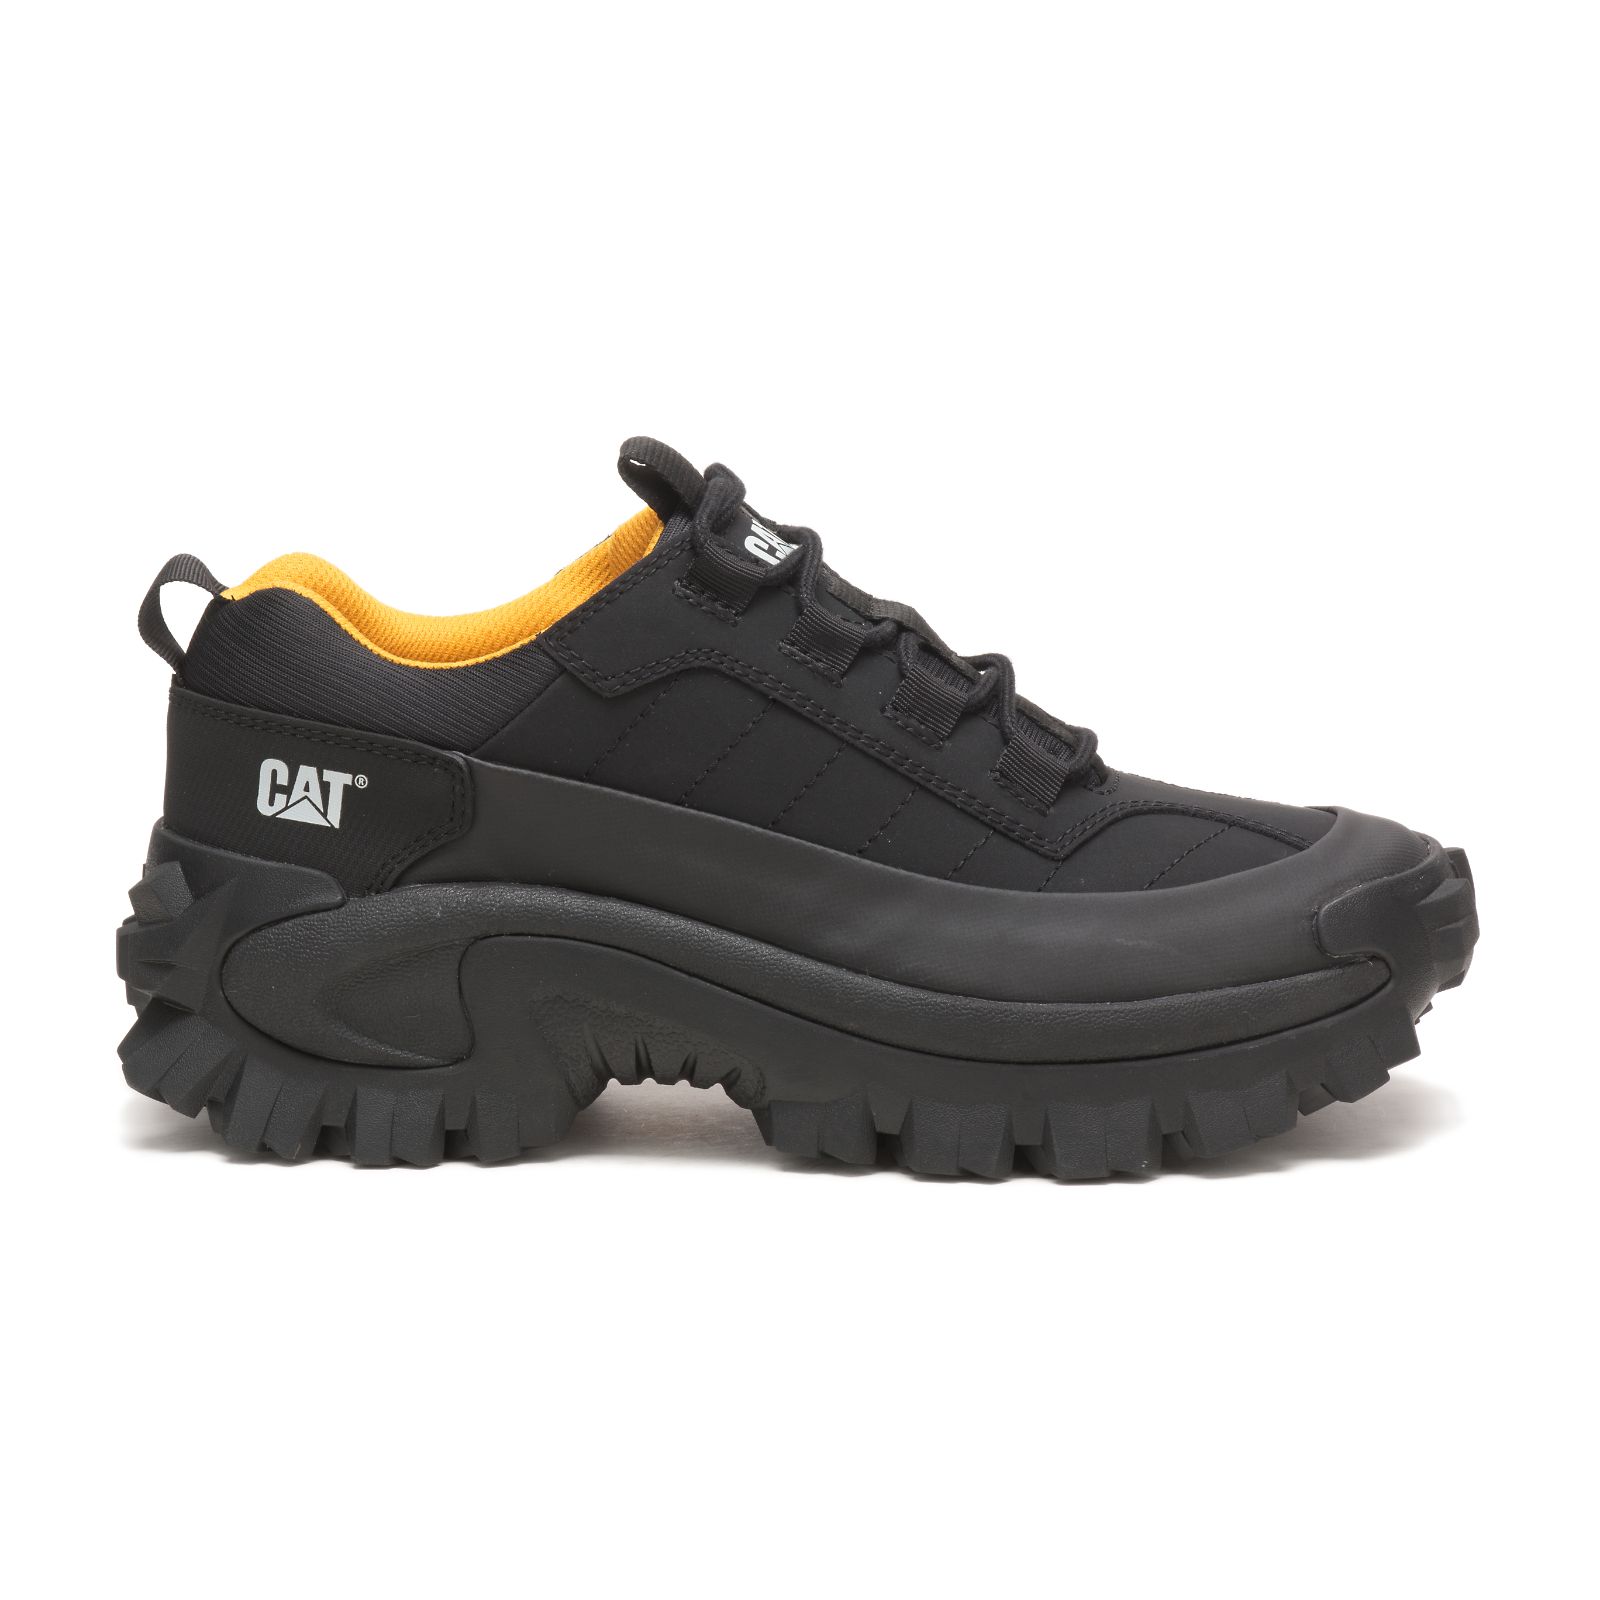 Caterpillar Sneakers UAE - Caterpillar Intruder Waterproof Galosh Mens - Black QHIZJW530